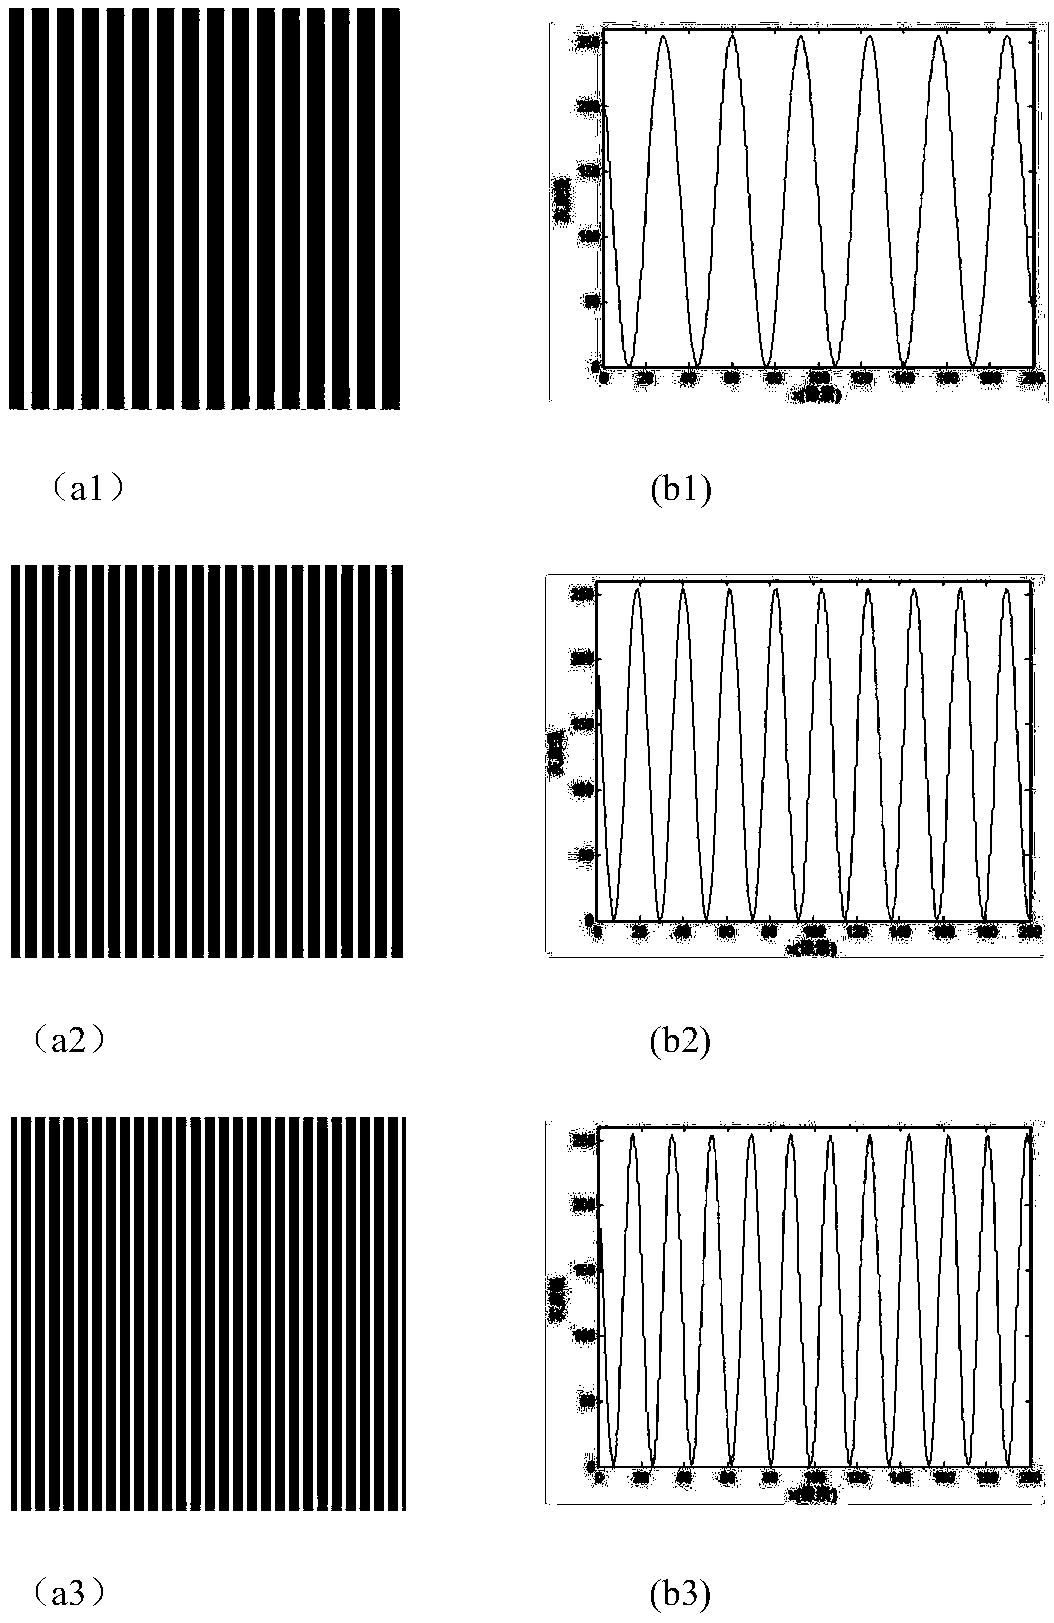 An Adaptive Illumination Optimization Method Based on Sinusoidal Grating Projection